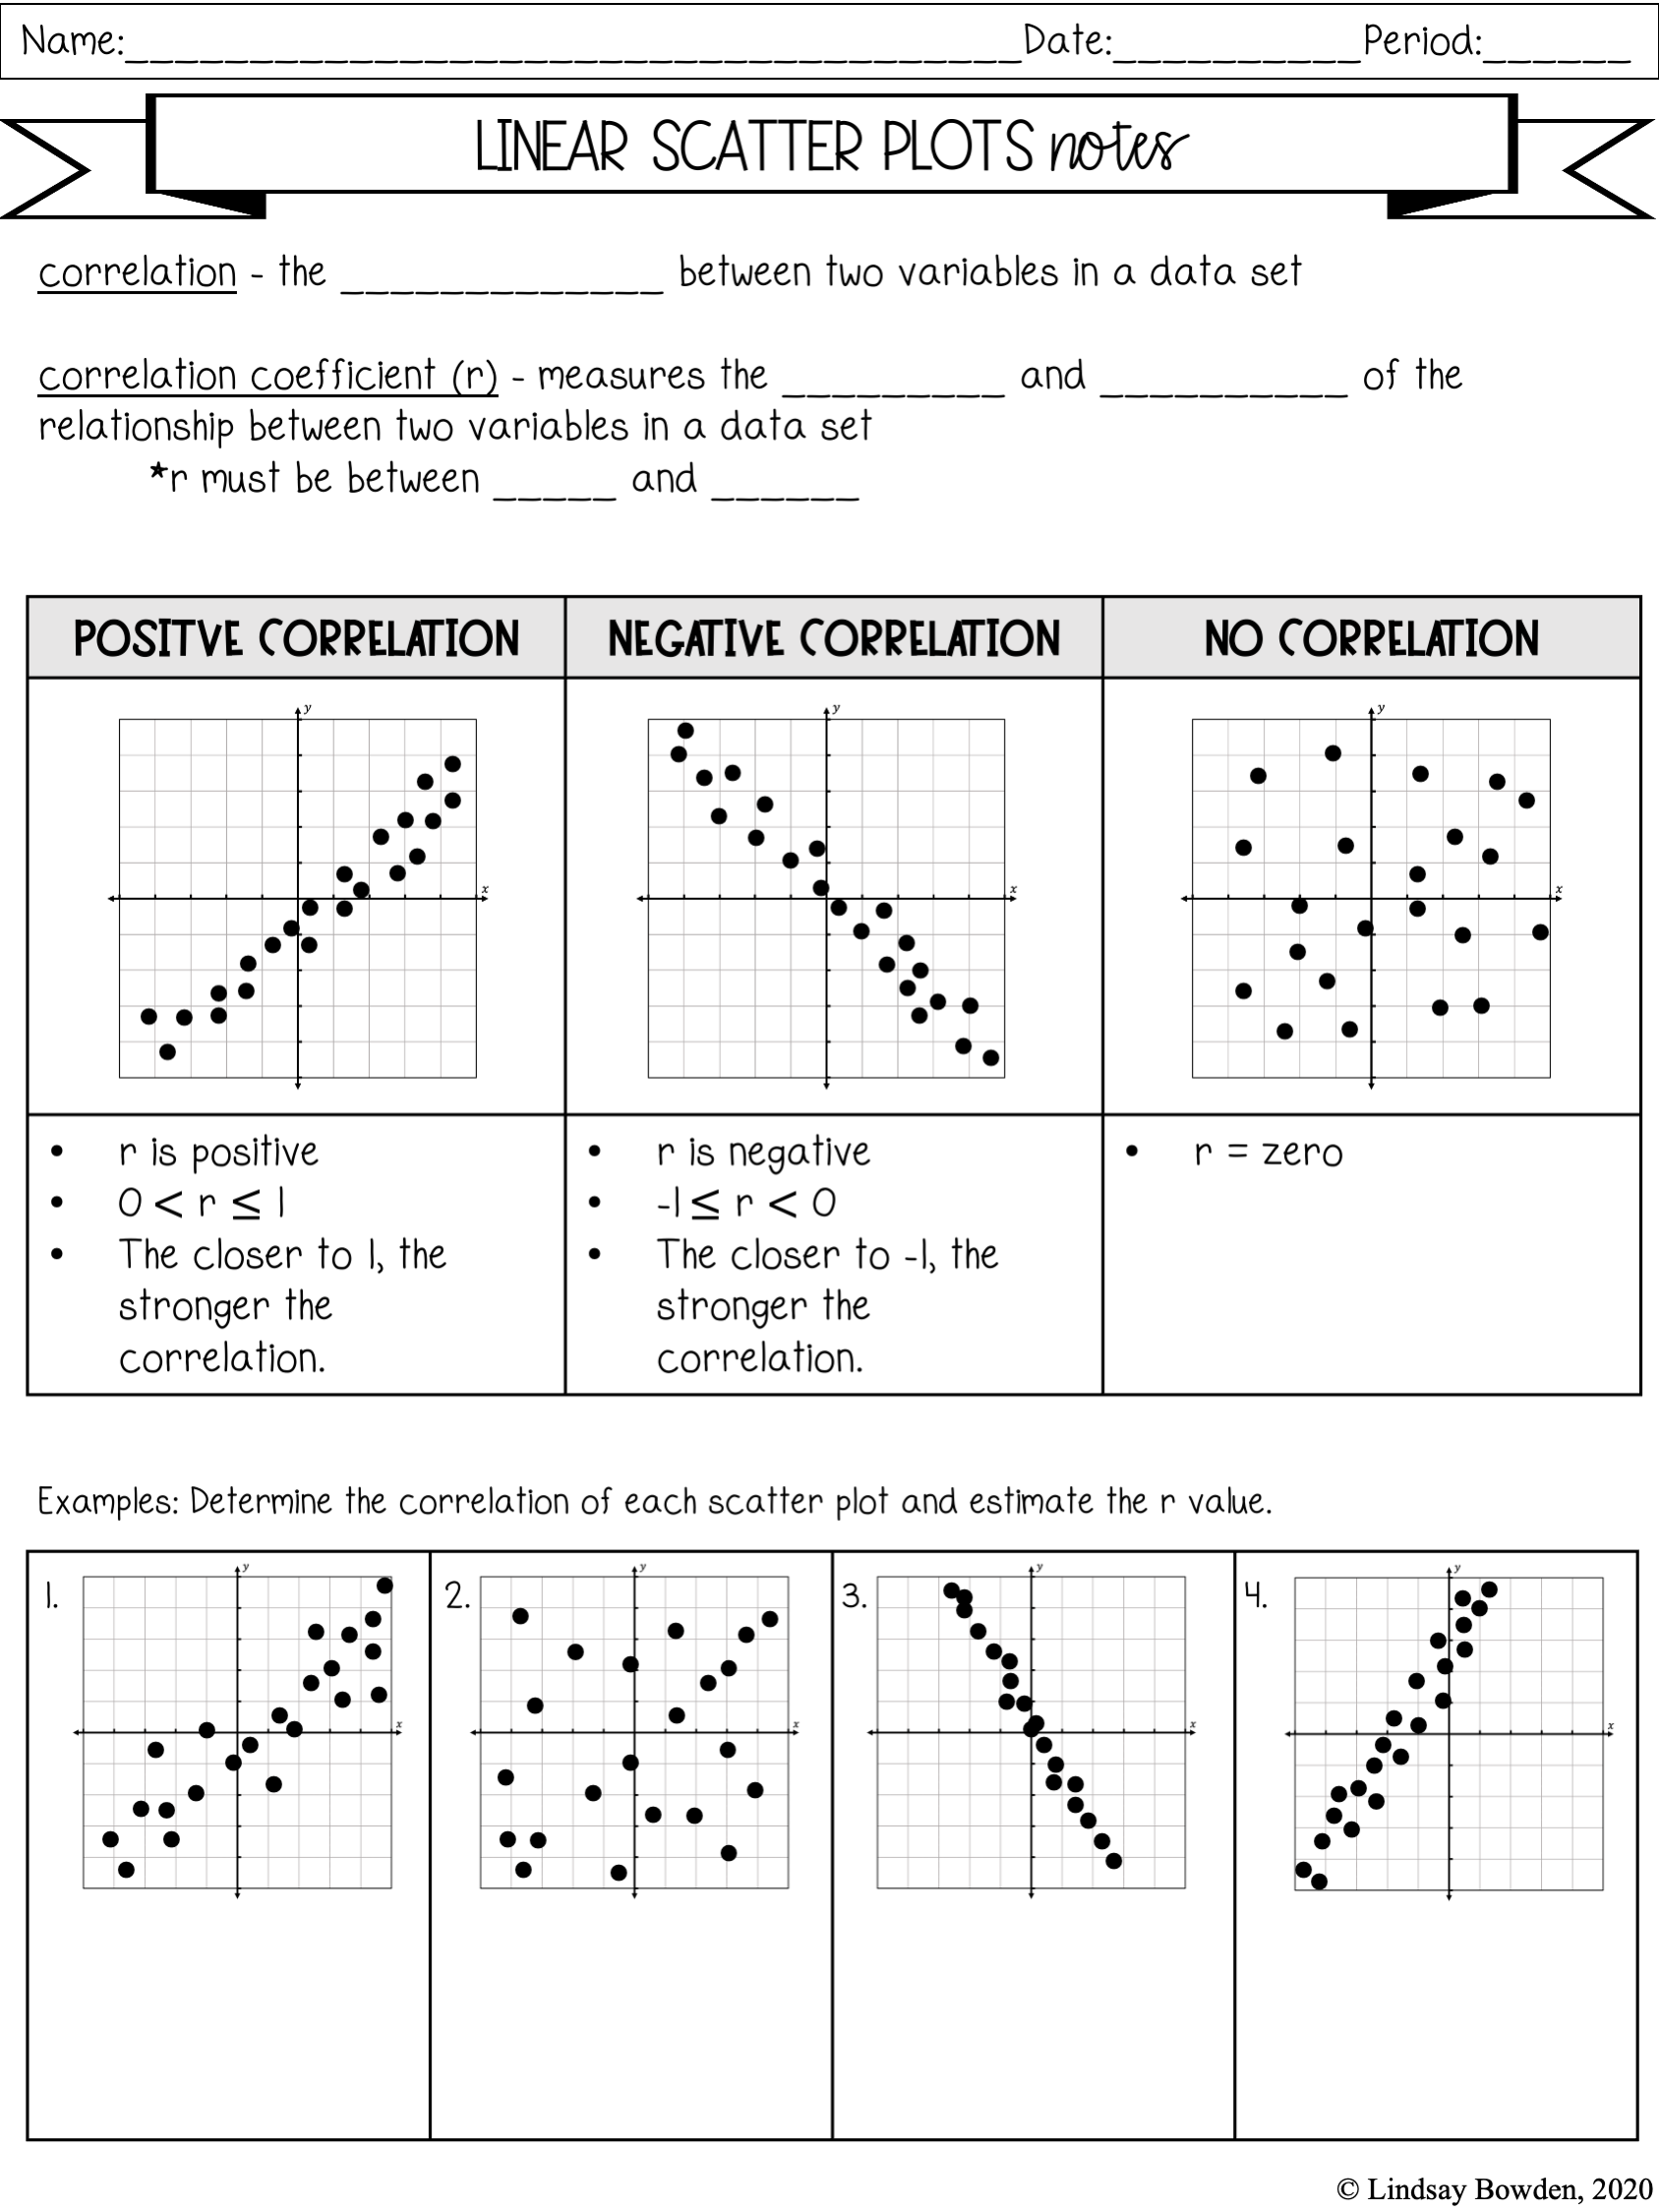 Scatter Plots Notes and Worksheets - Lindsay Bowden Intended For Correlation Vs Causation Worksheet